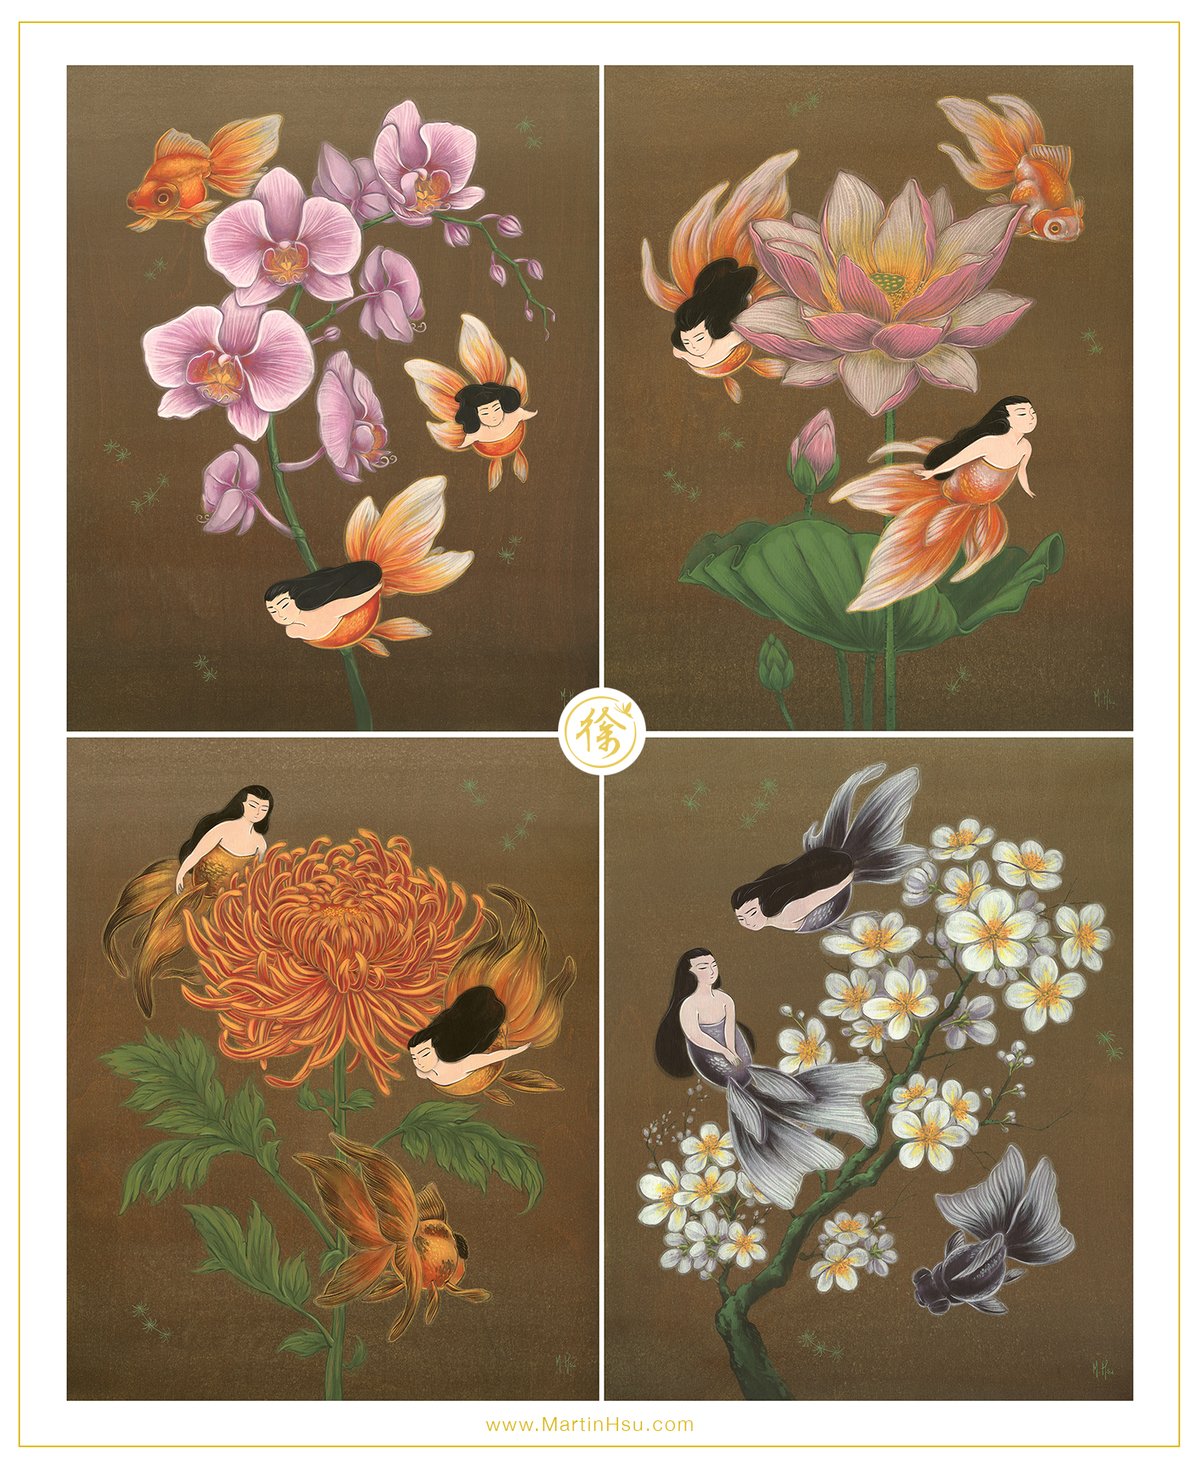 LTD Prints - Four Seasons